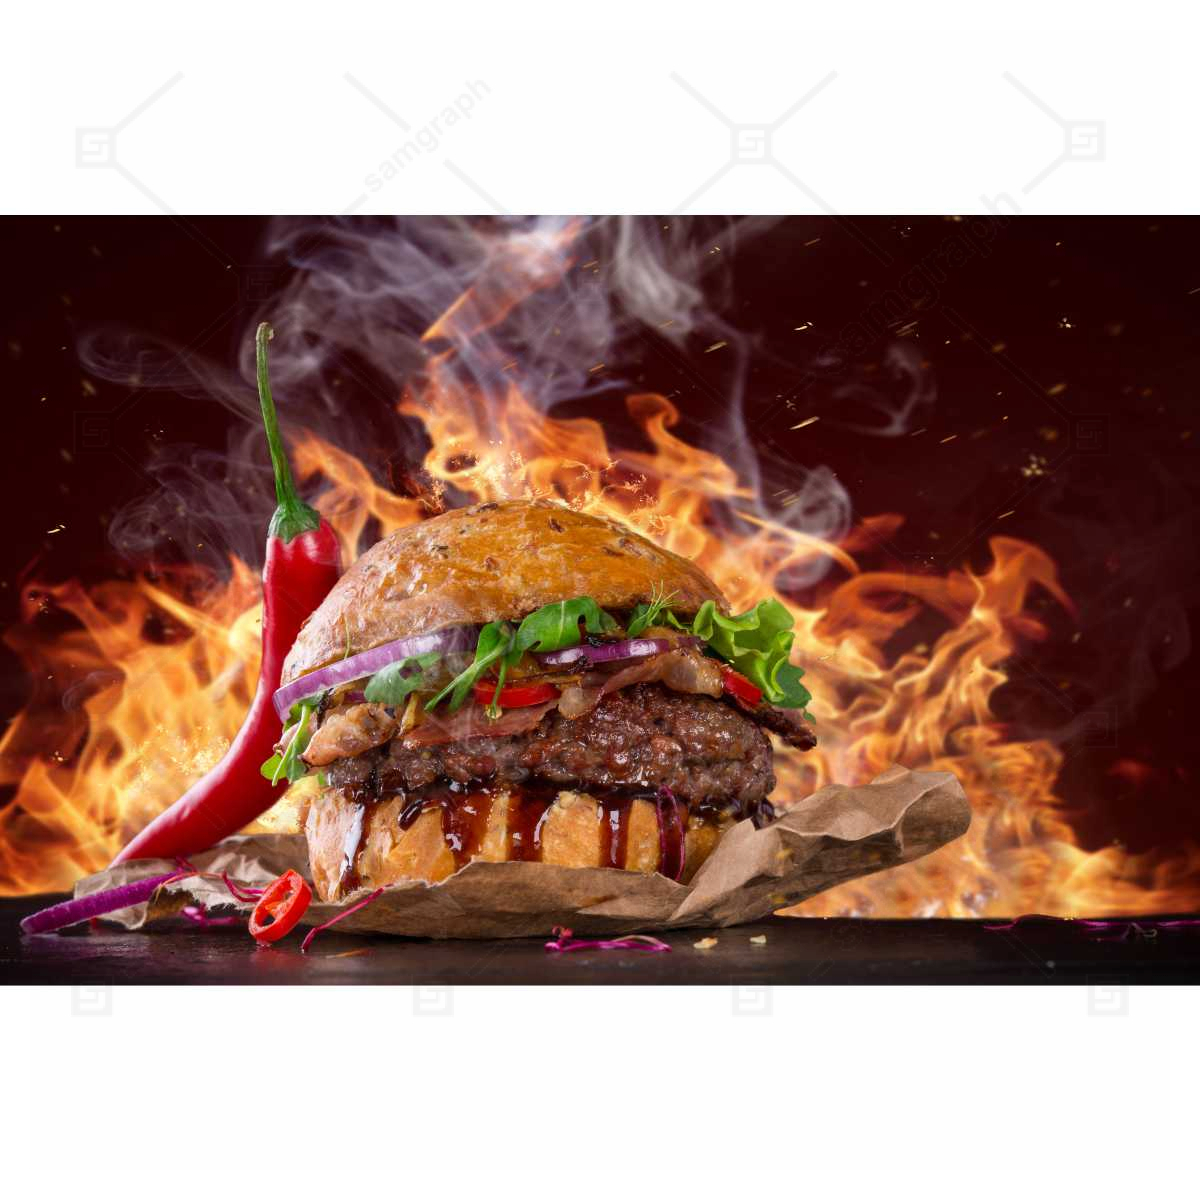 High quality photo of juicy hamburger with fire and pepper lettuce onion parsley 2 1 تصویر با کیفیت ساندویچ ژامبون با پنیر کاهو گوجه فرنگی پیزا مرتادلا سوسیس